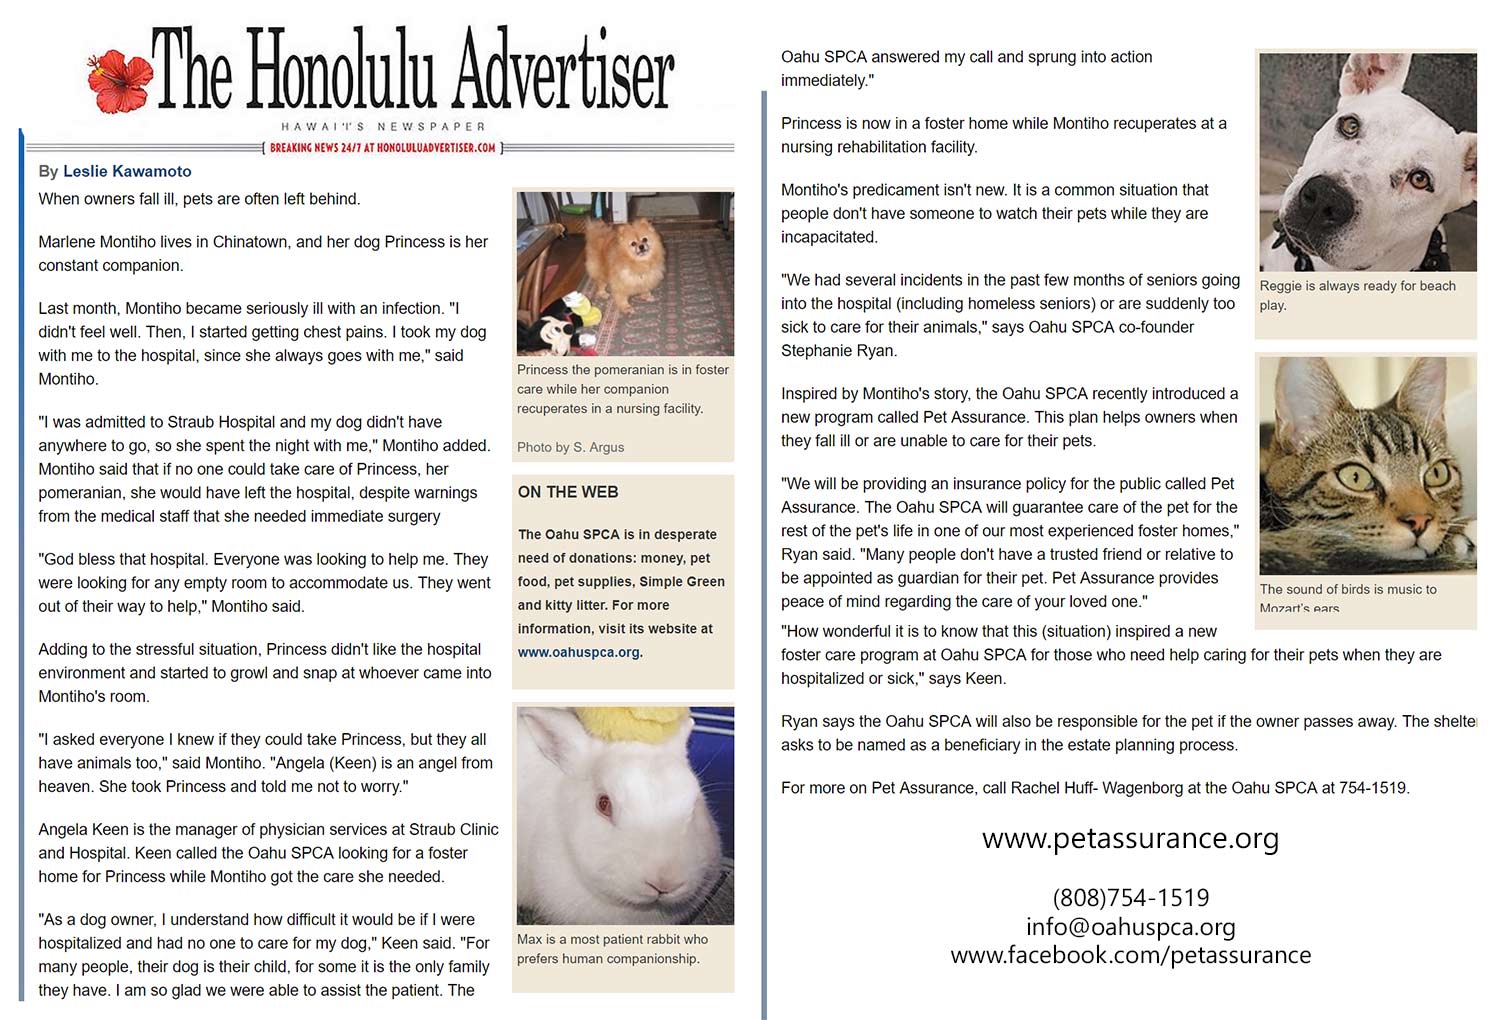 Oahu SPCA pet assurance honolulu advertisers